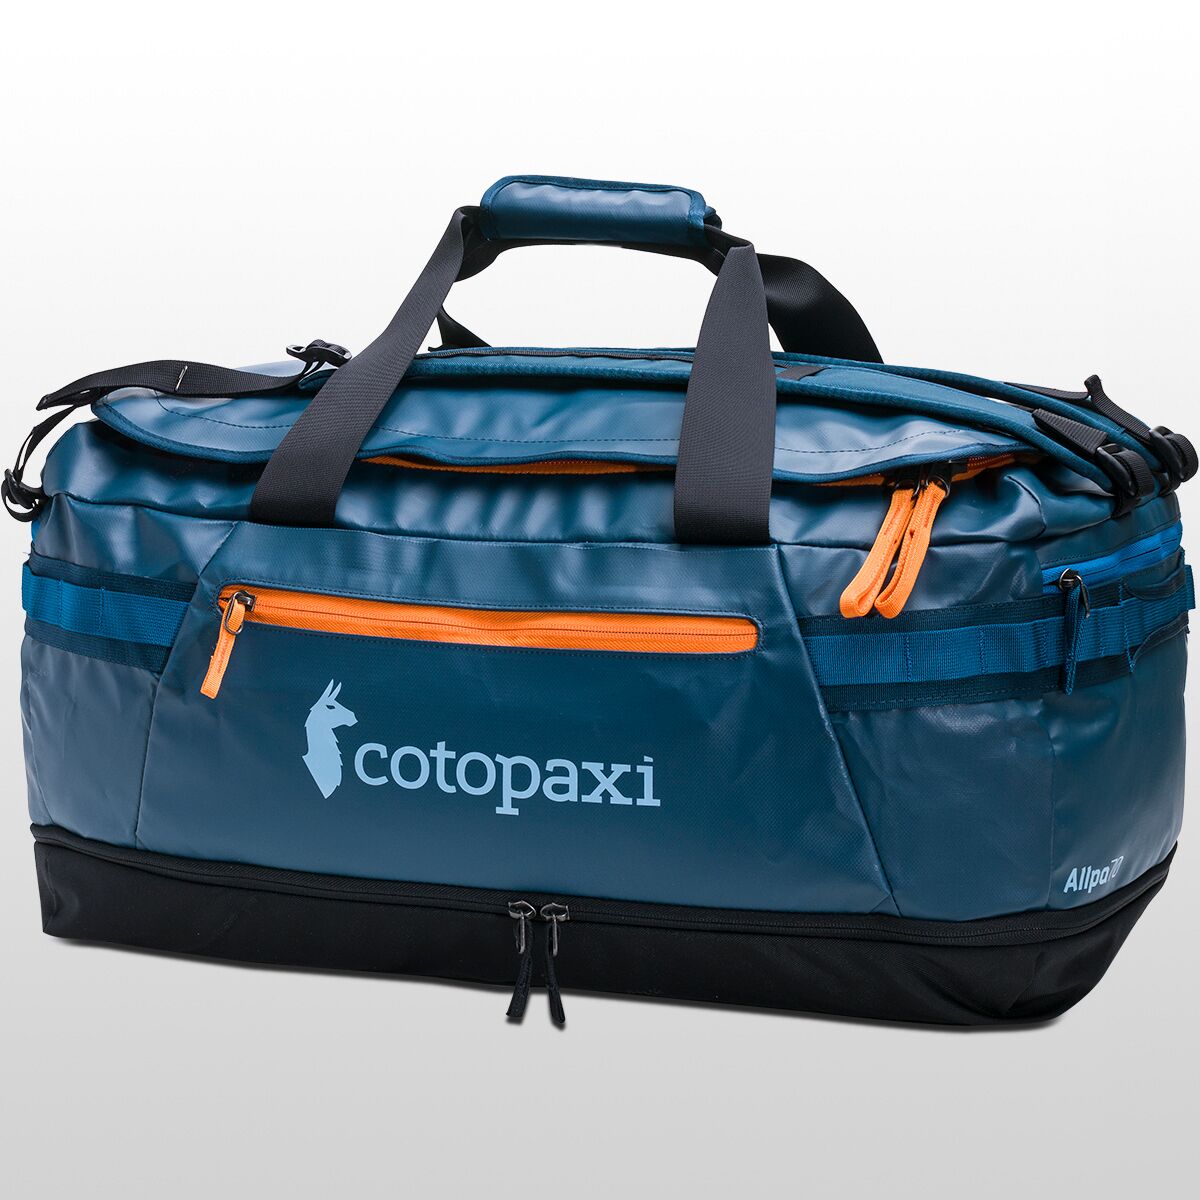 Cotopaxi Allpa Duo 70L Duffel Bag - Accessories